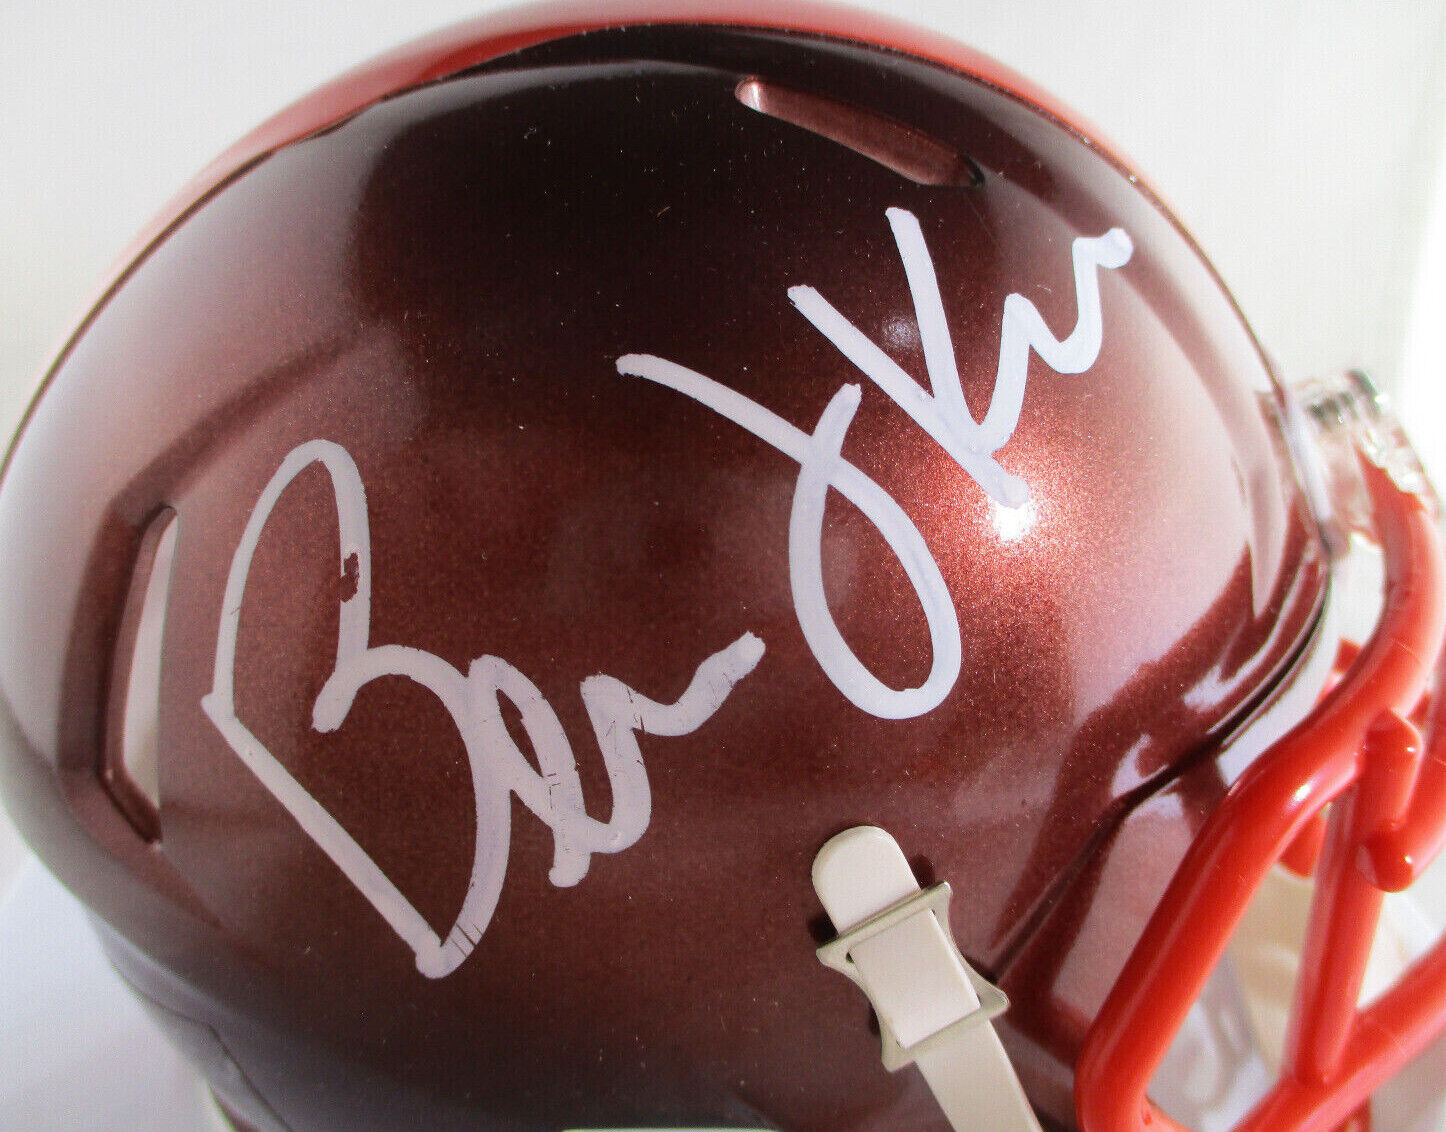 Bernie Kosar / Autographed Cleveland Browns Flash Alternate Mini Helmet / JSA